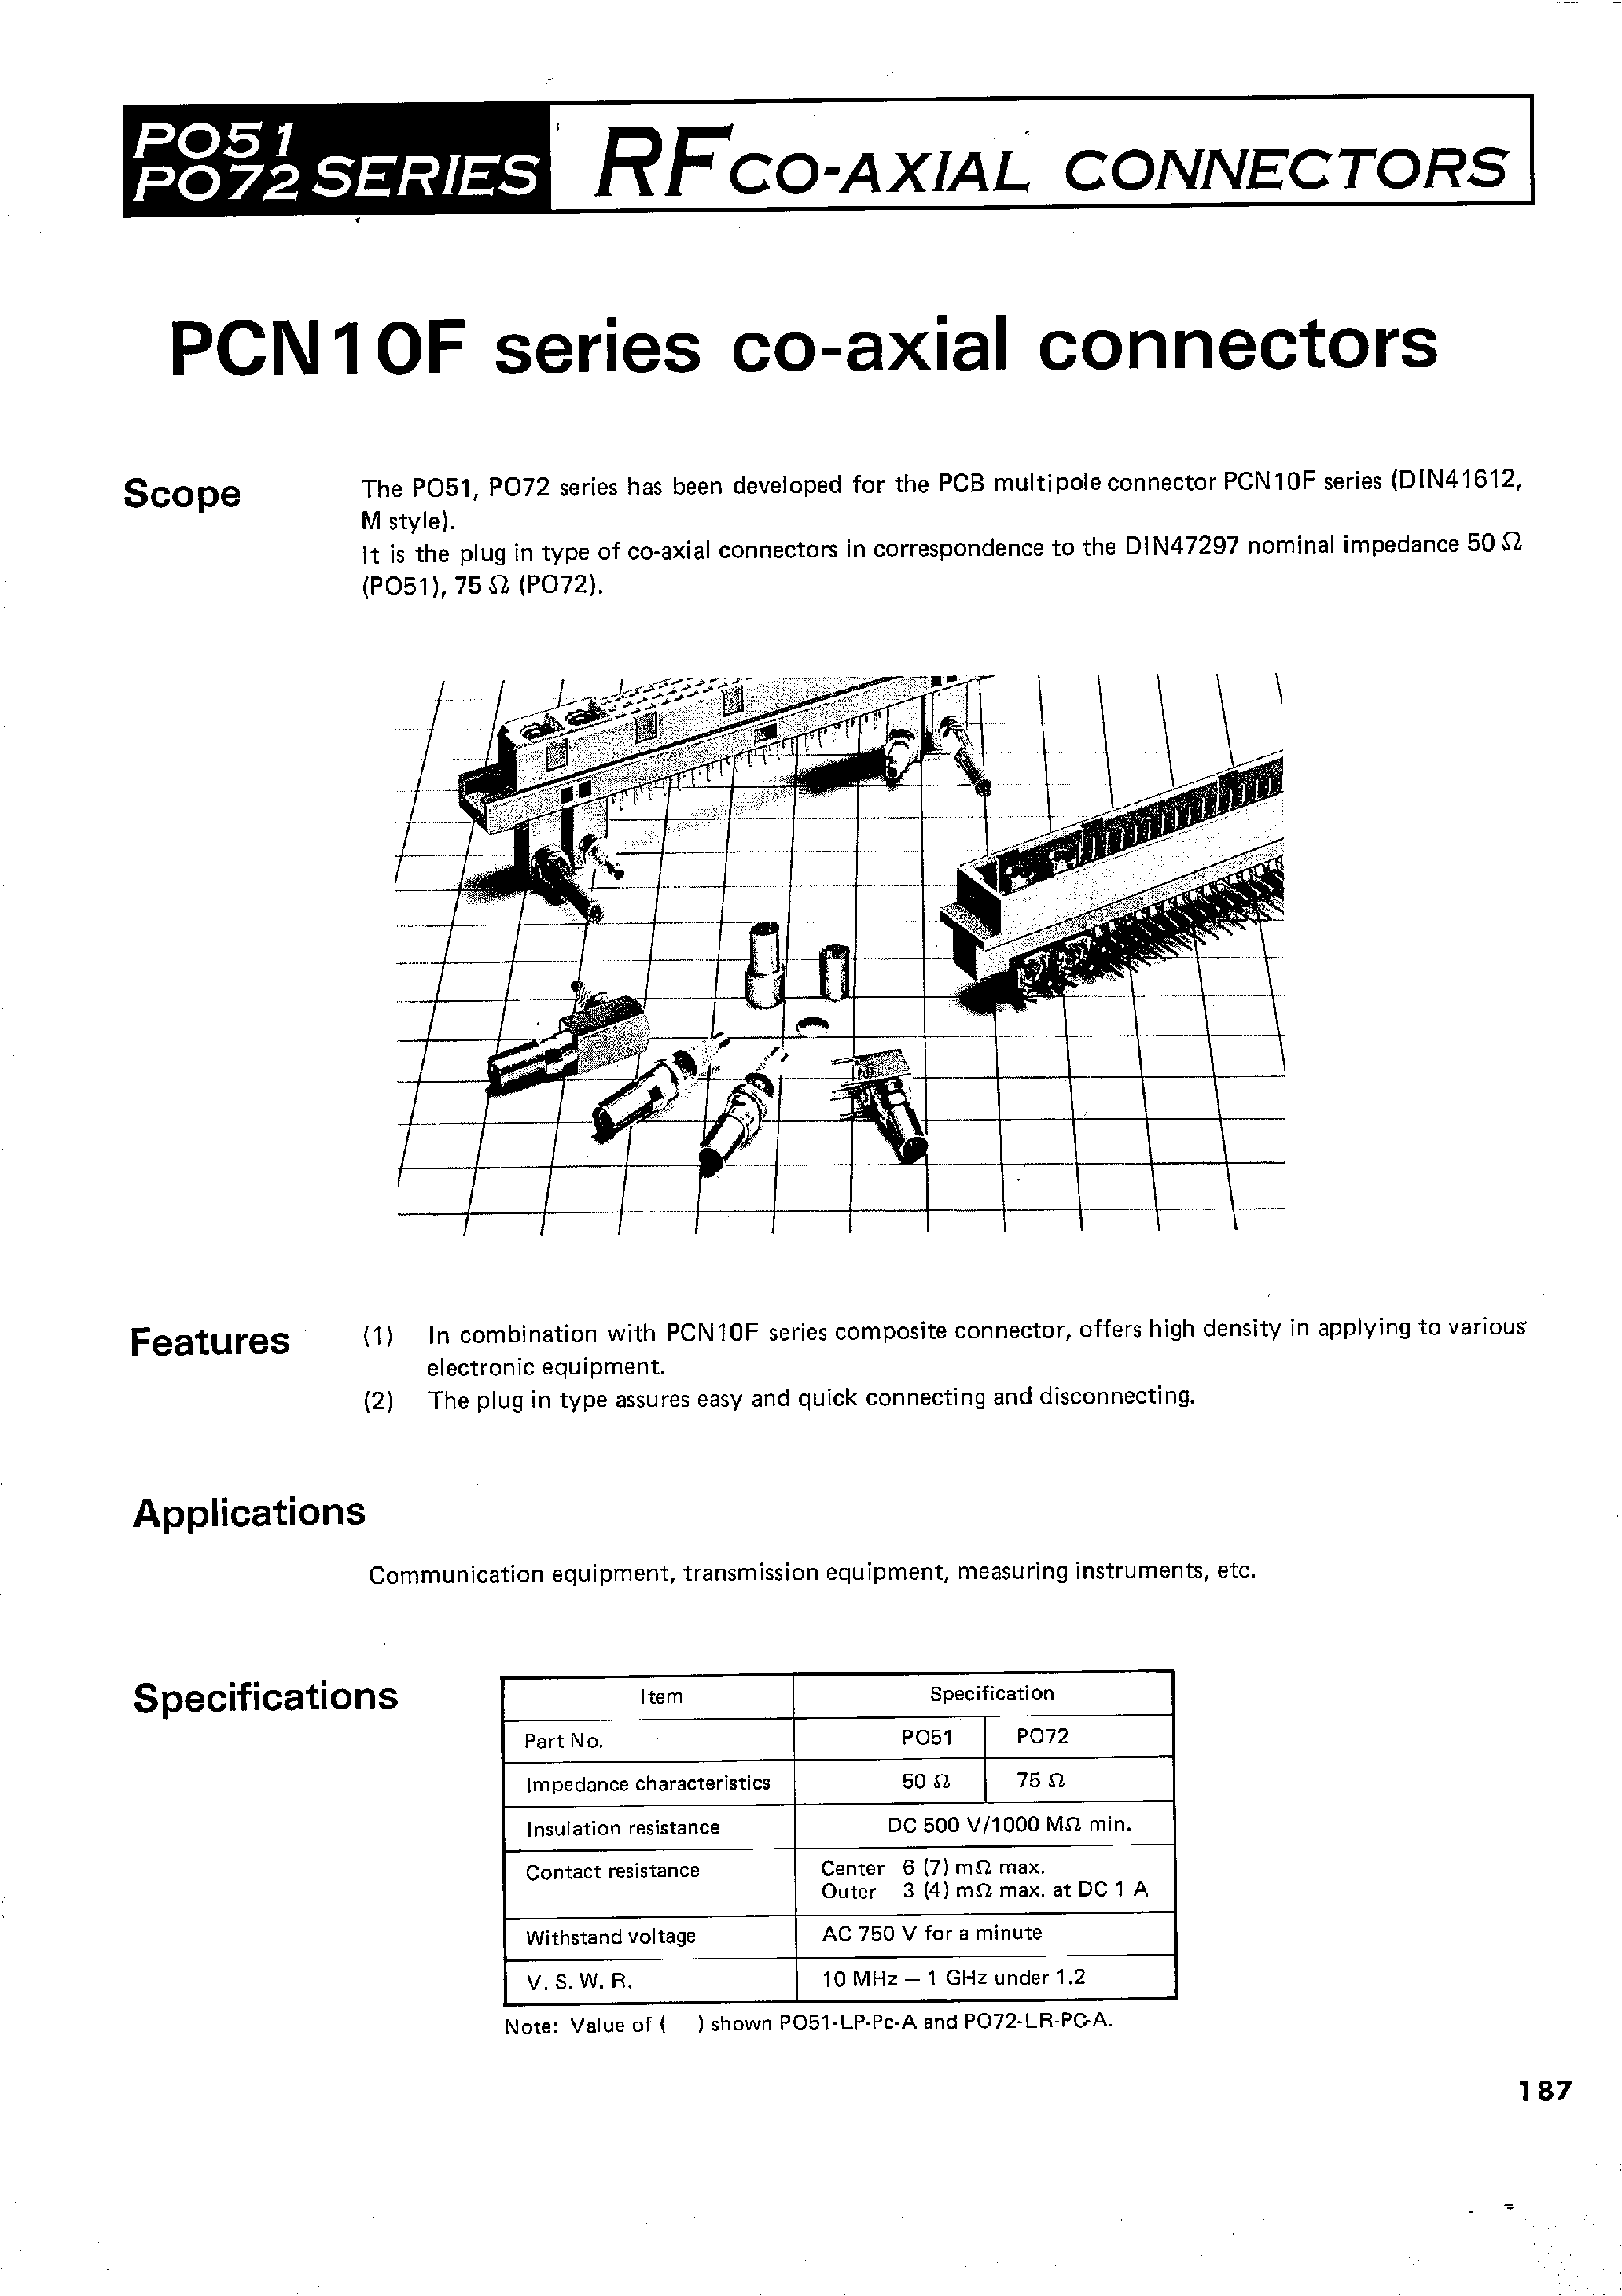 Даташит PO51-P-1.5-1A - RFCO-AXIAL CONNECTORS страница 1